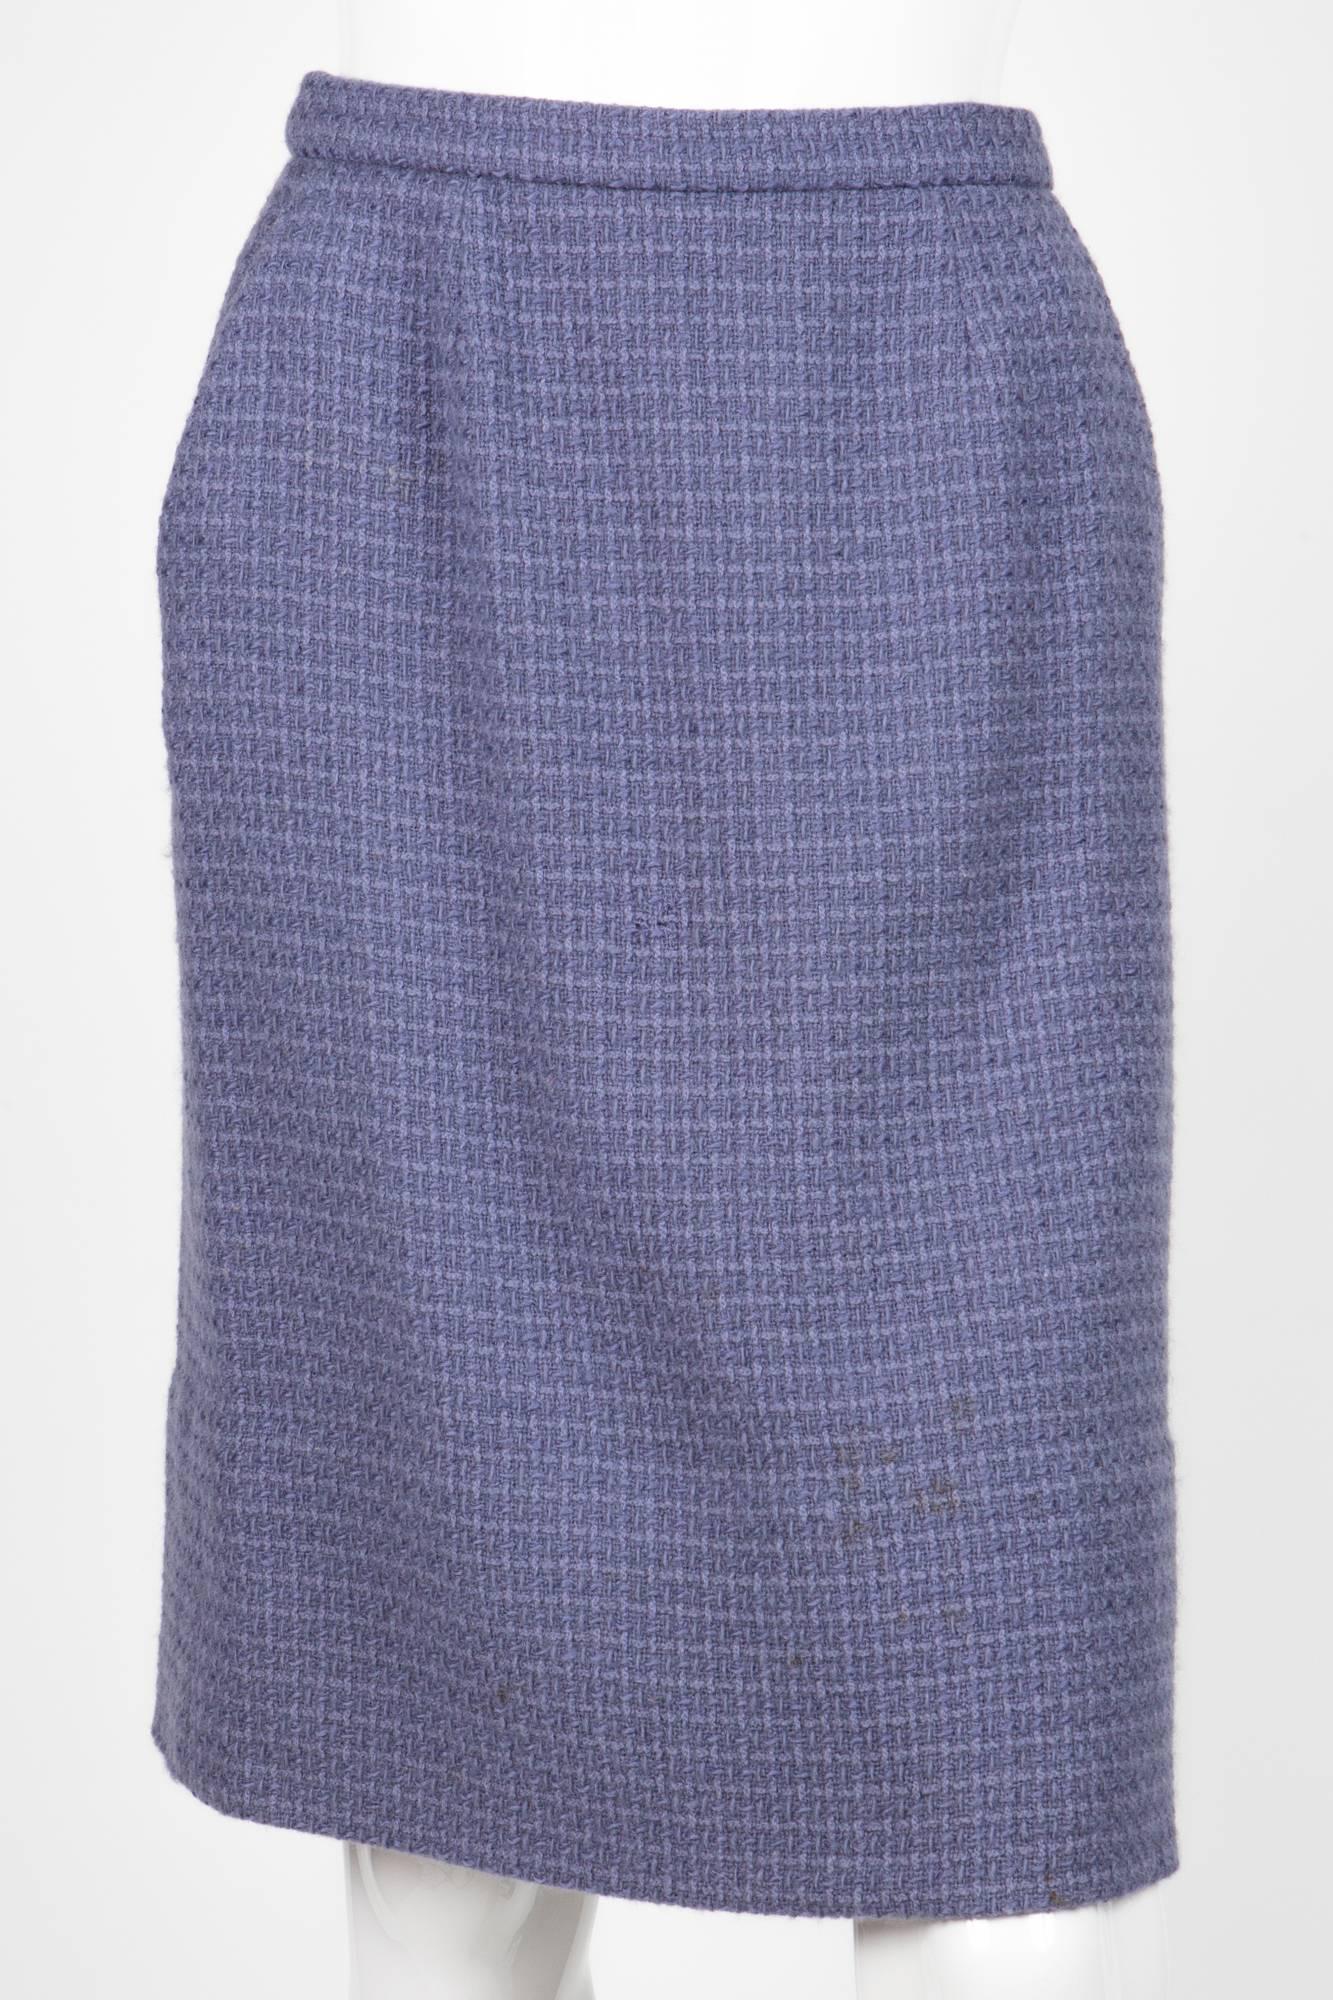 1970s Iconic Parme Boucle Chanel Skirt Suit 4